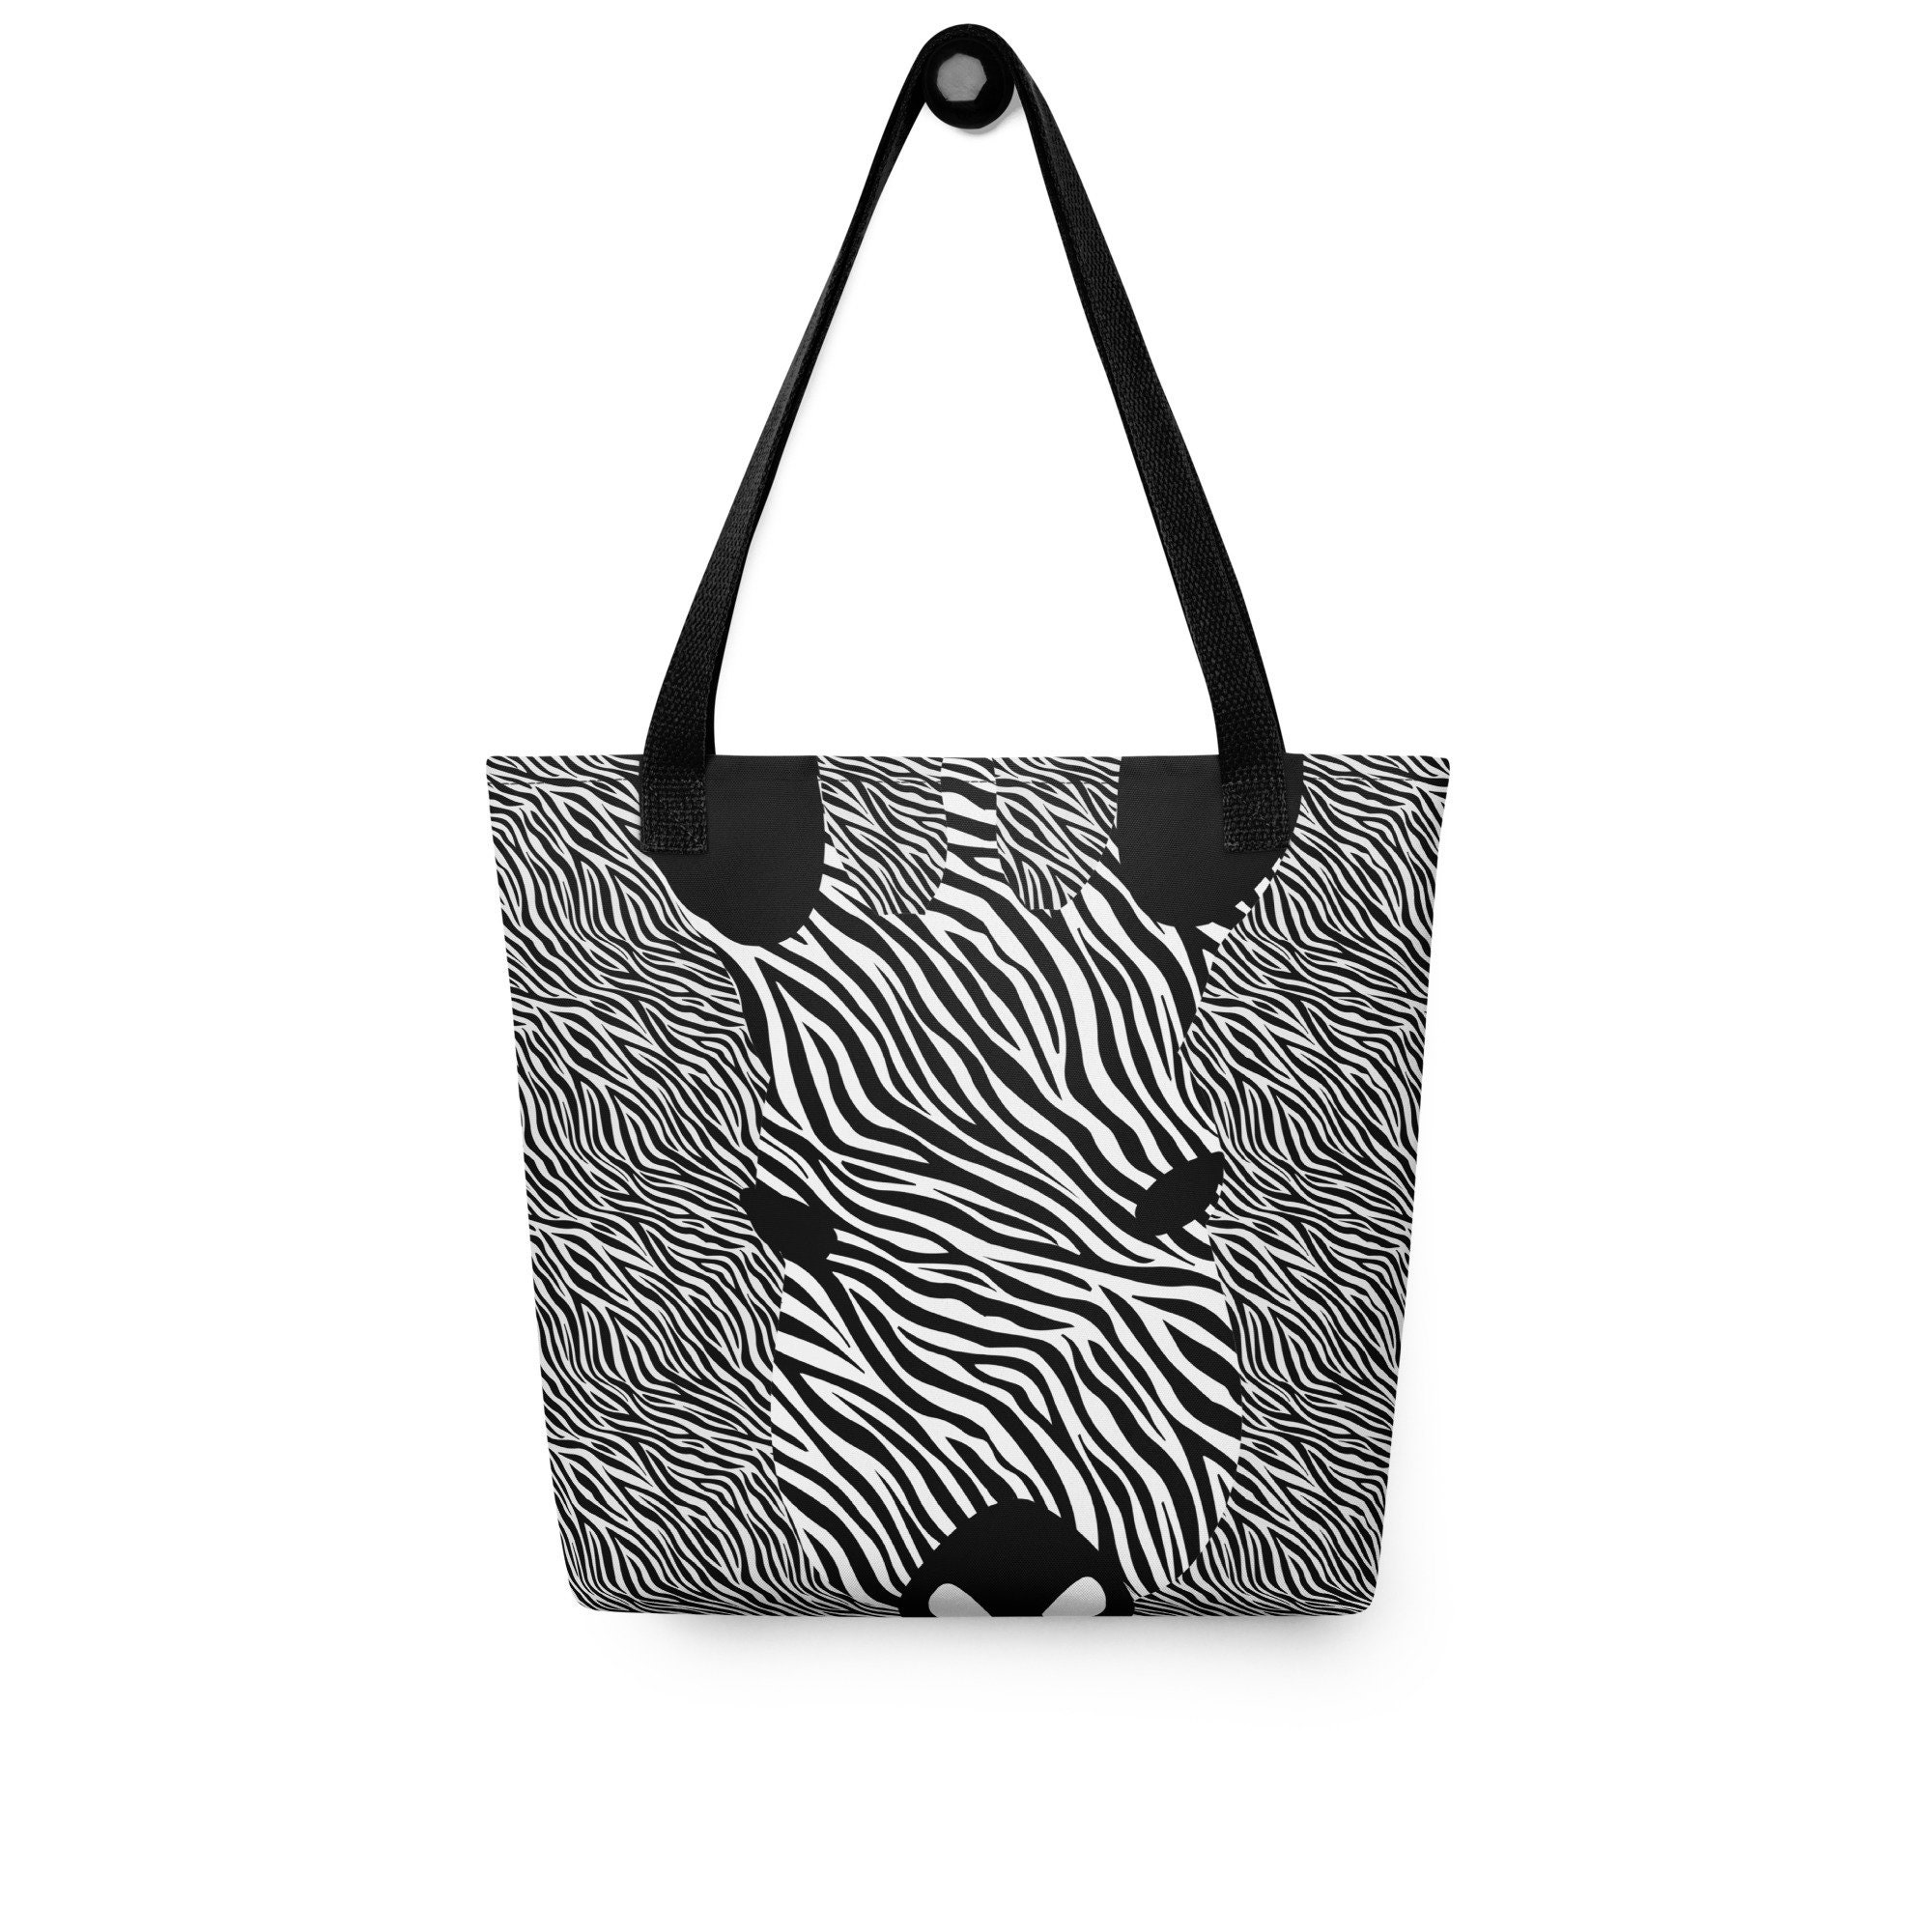 Dash Grocery Tote - Zebra Print Tote Bag